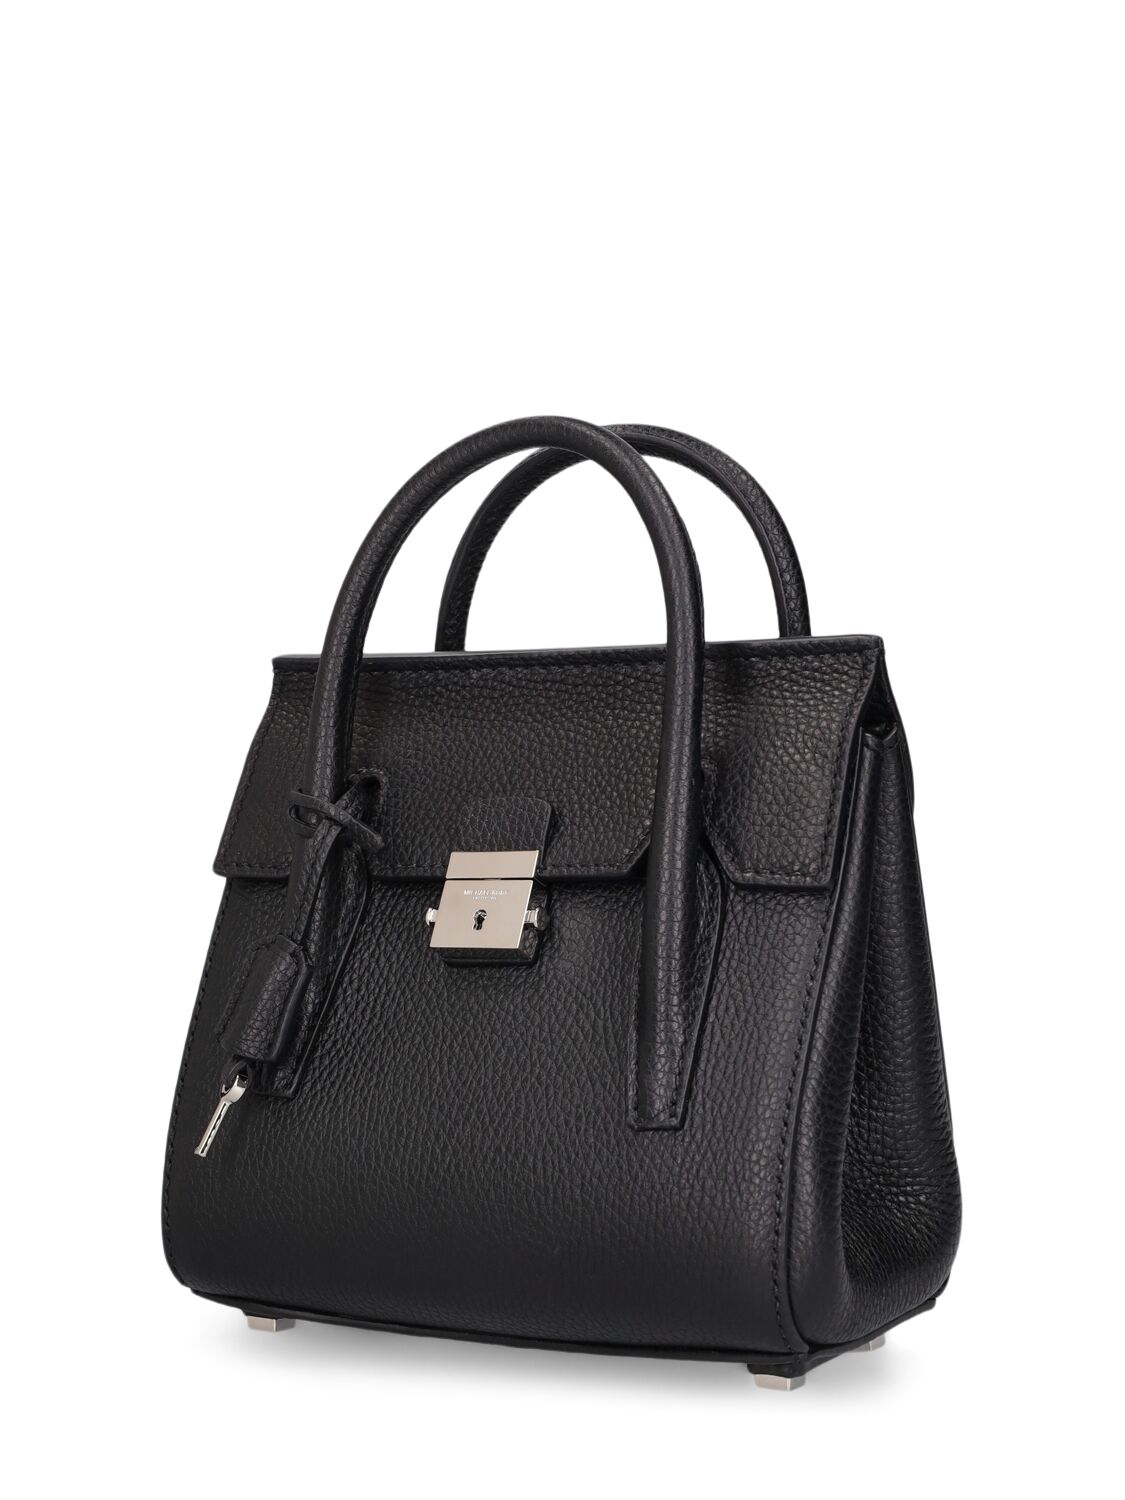 Shop Michael Kors Mini Campbell Leather Satchel Bag In Black